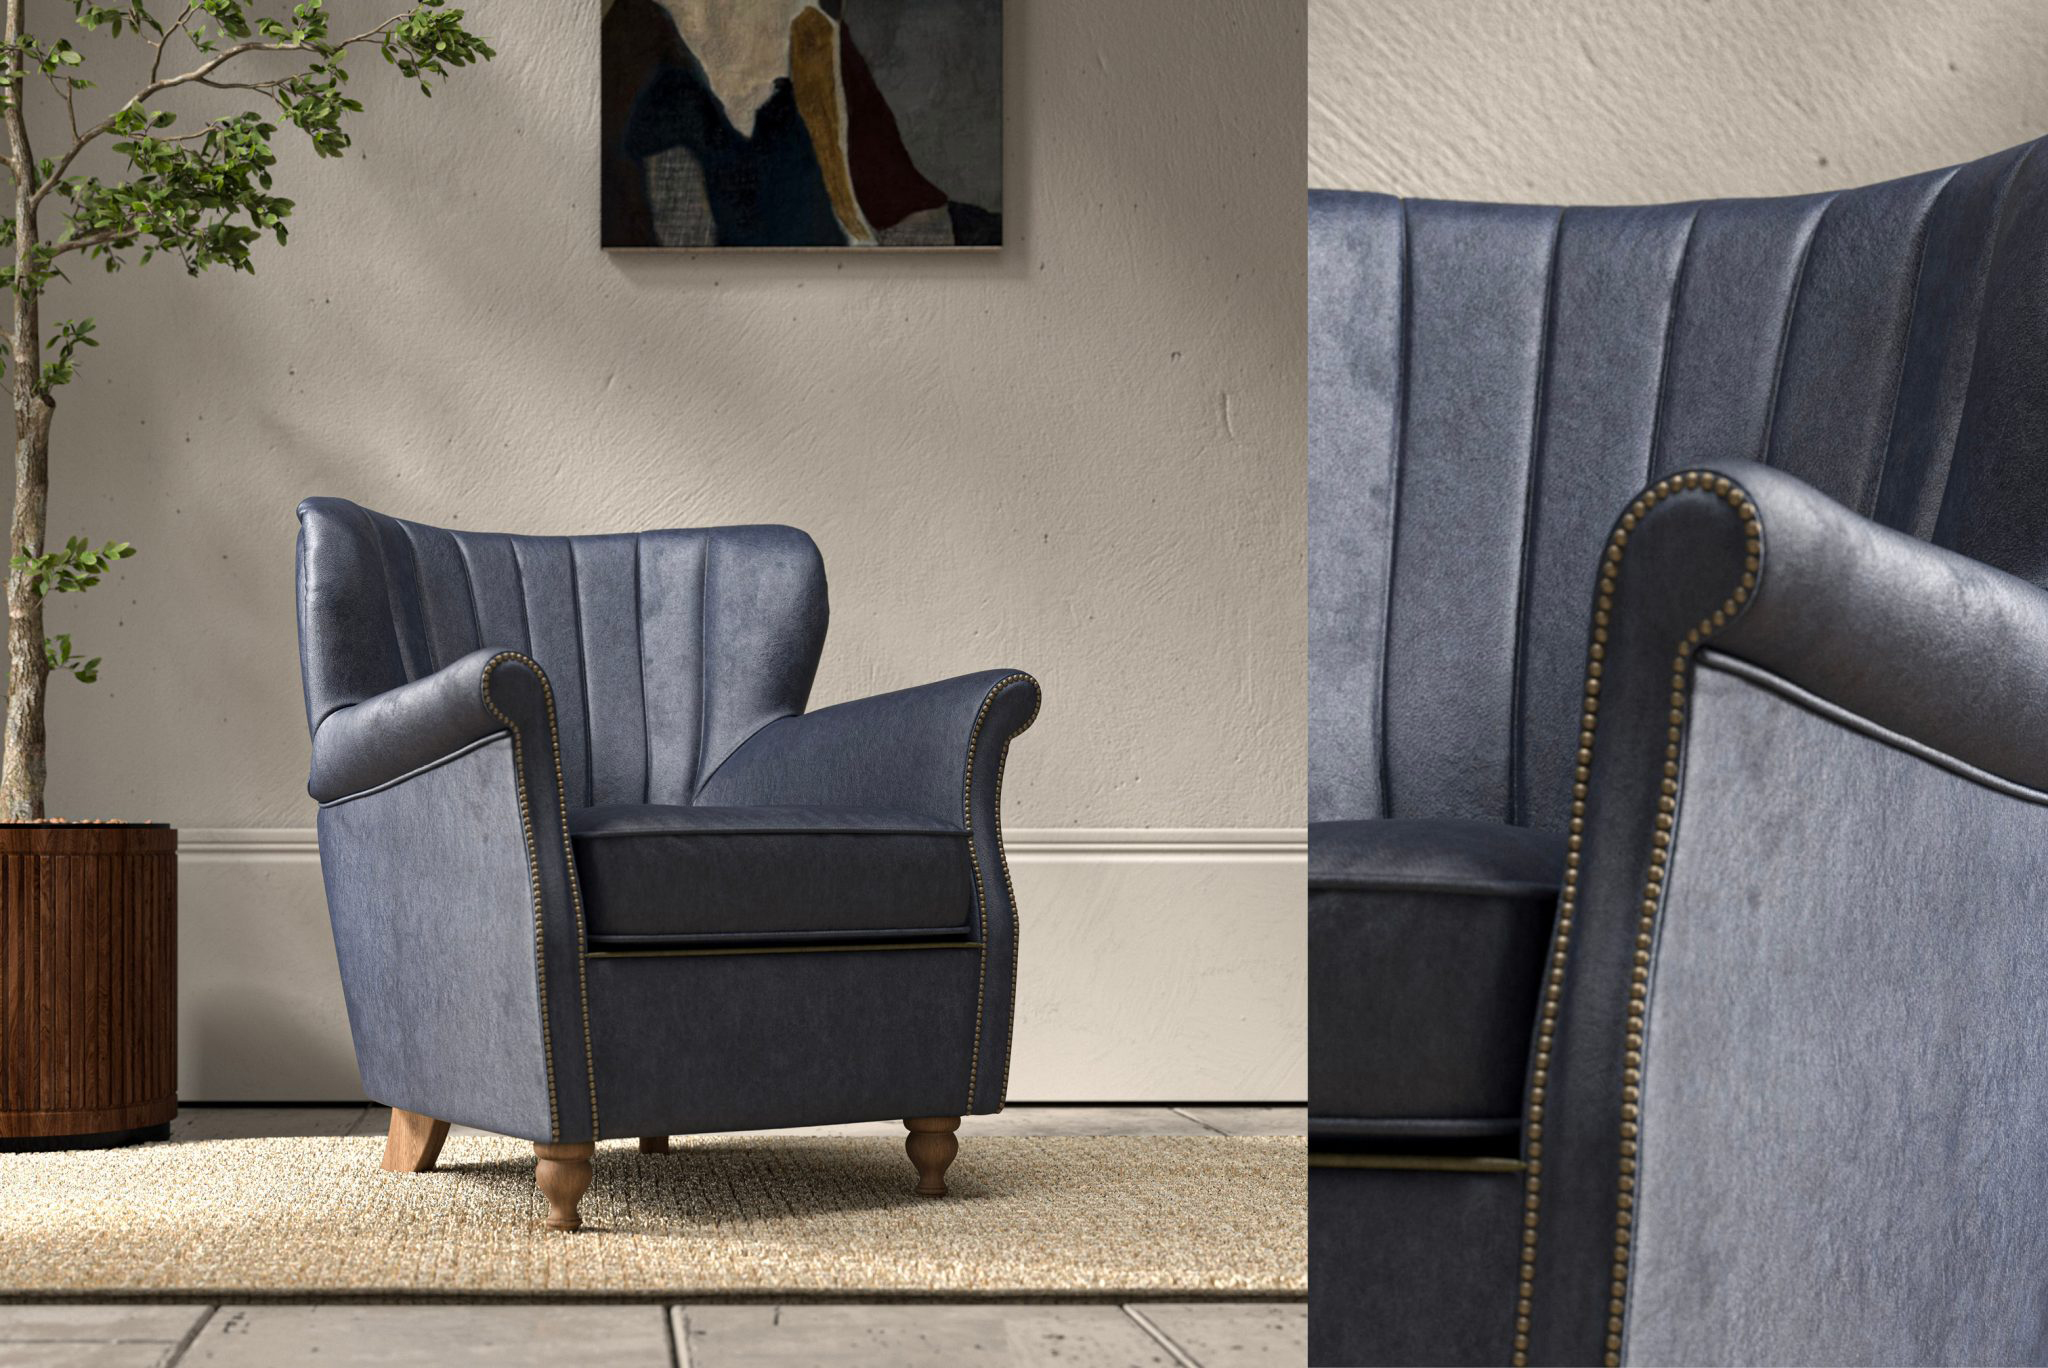 Alexander & James Percy Chair in Kodak Blue Leather